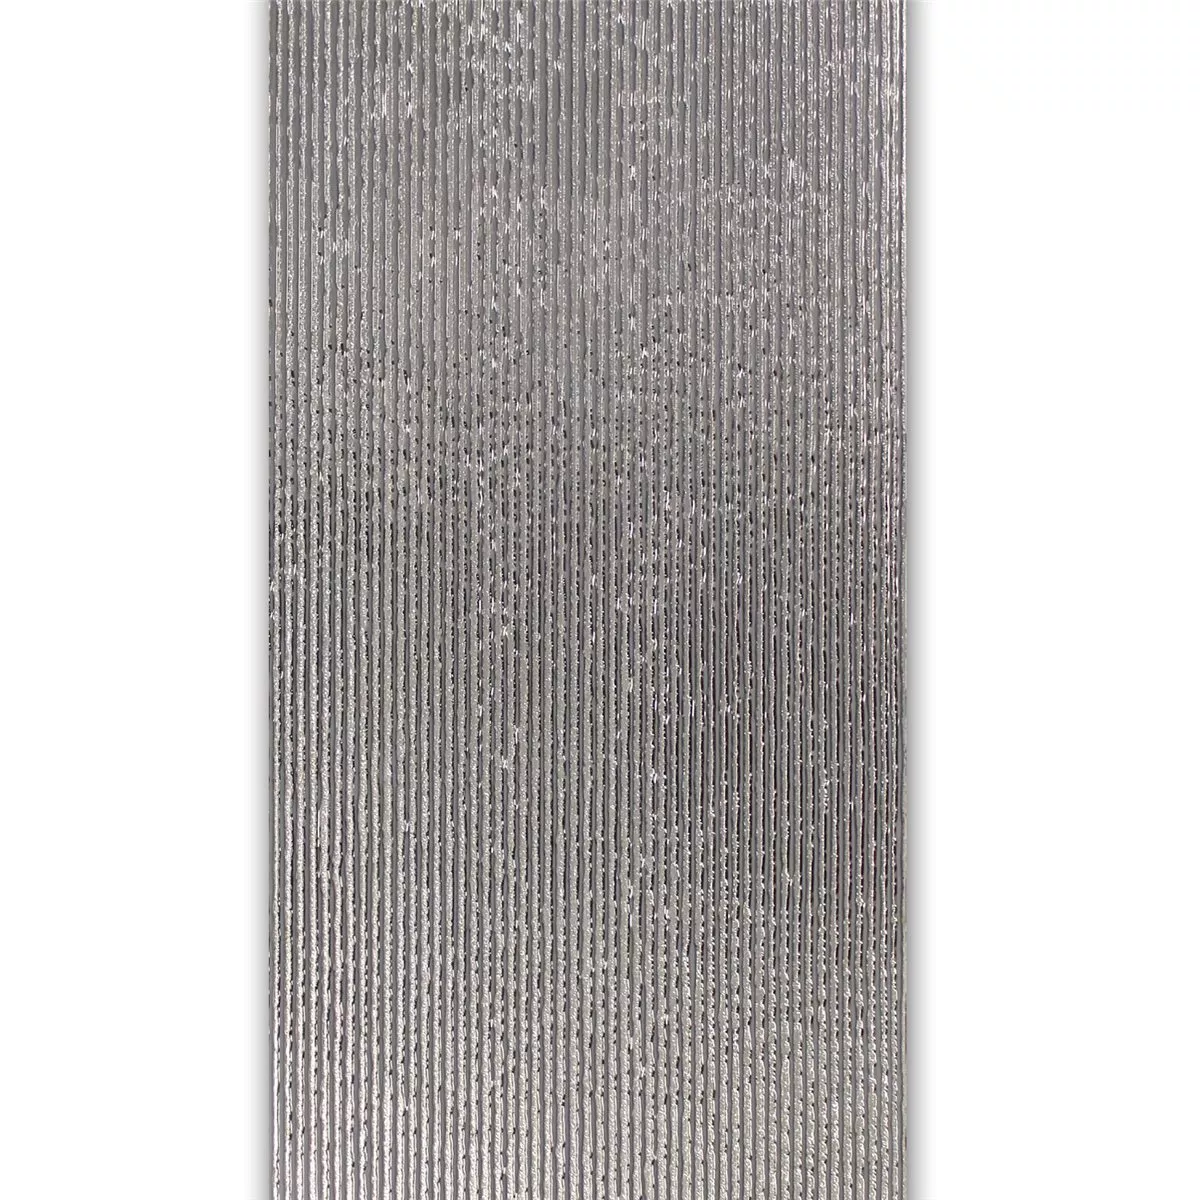 Nástěnný Dekor Dlaždice Stříbrná 30x60cm